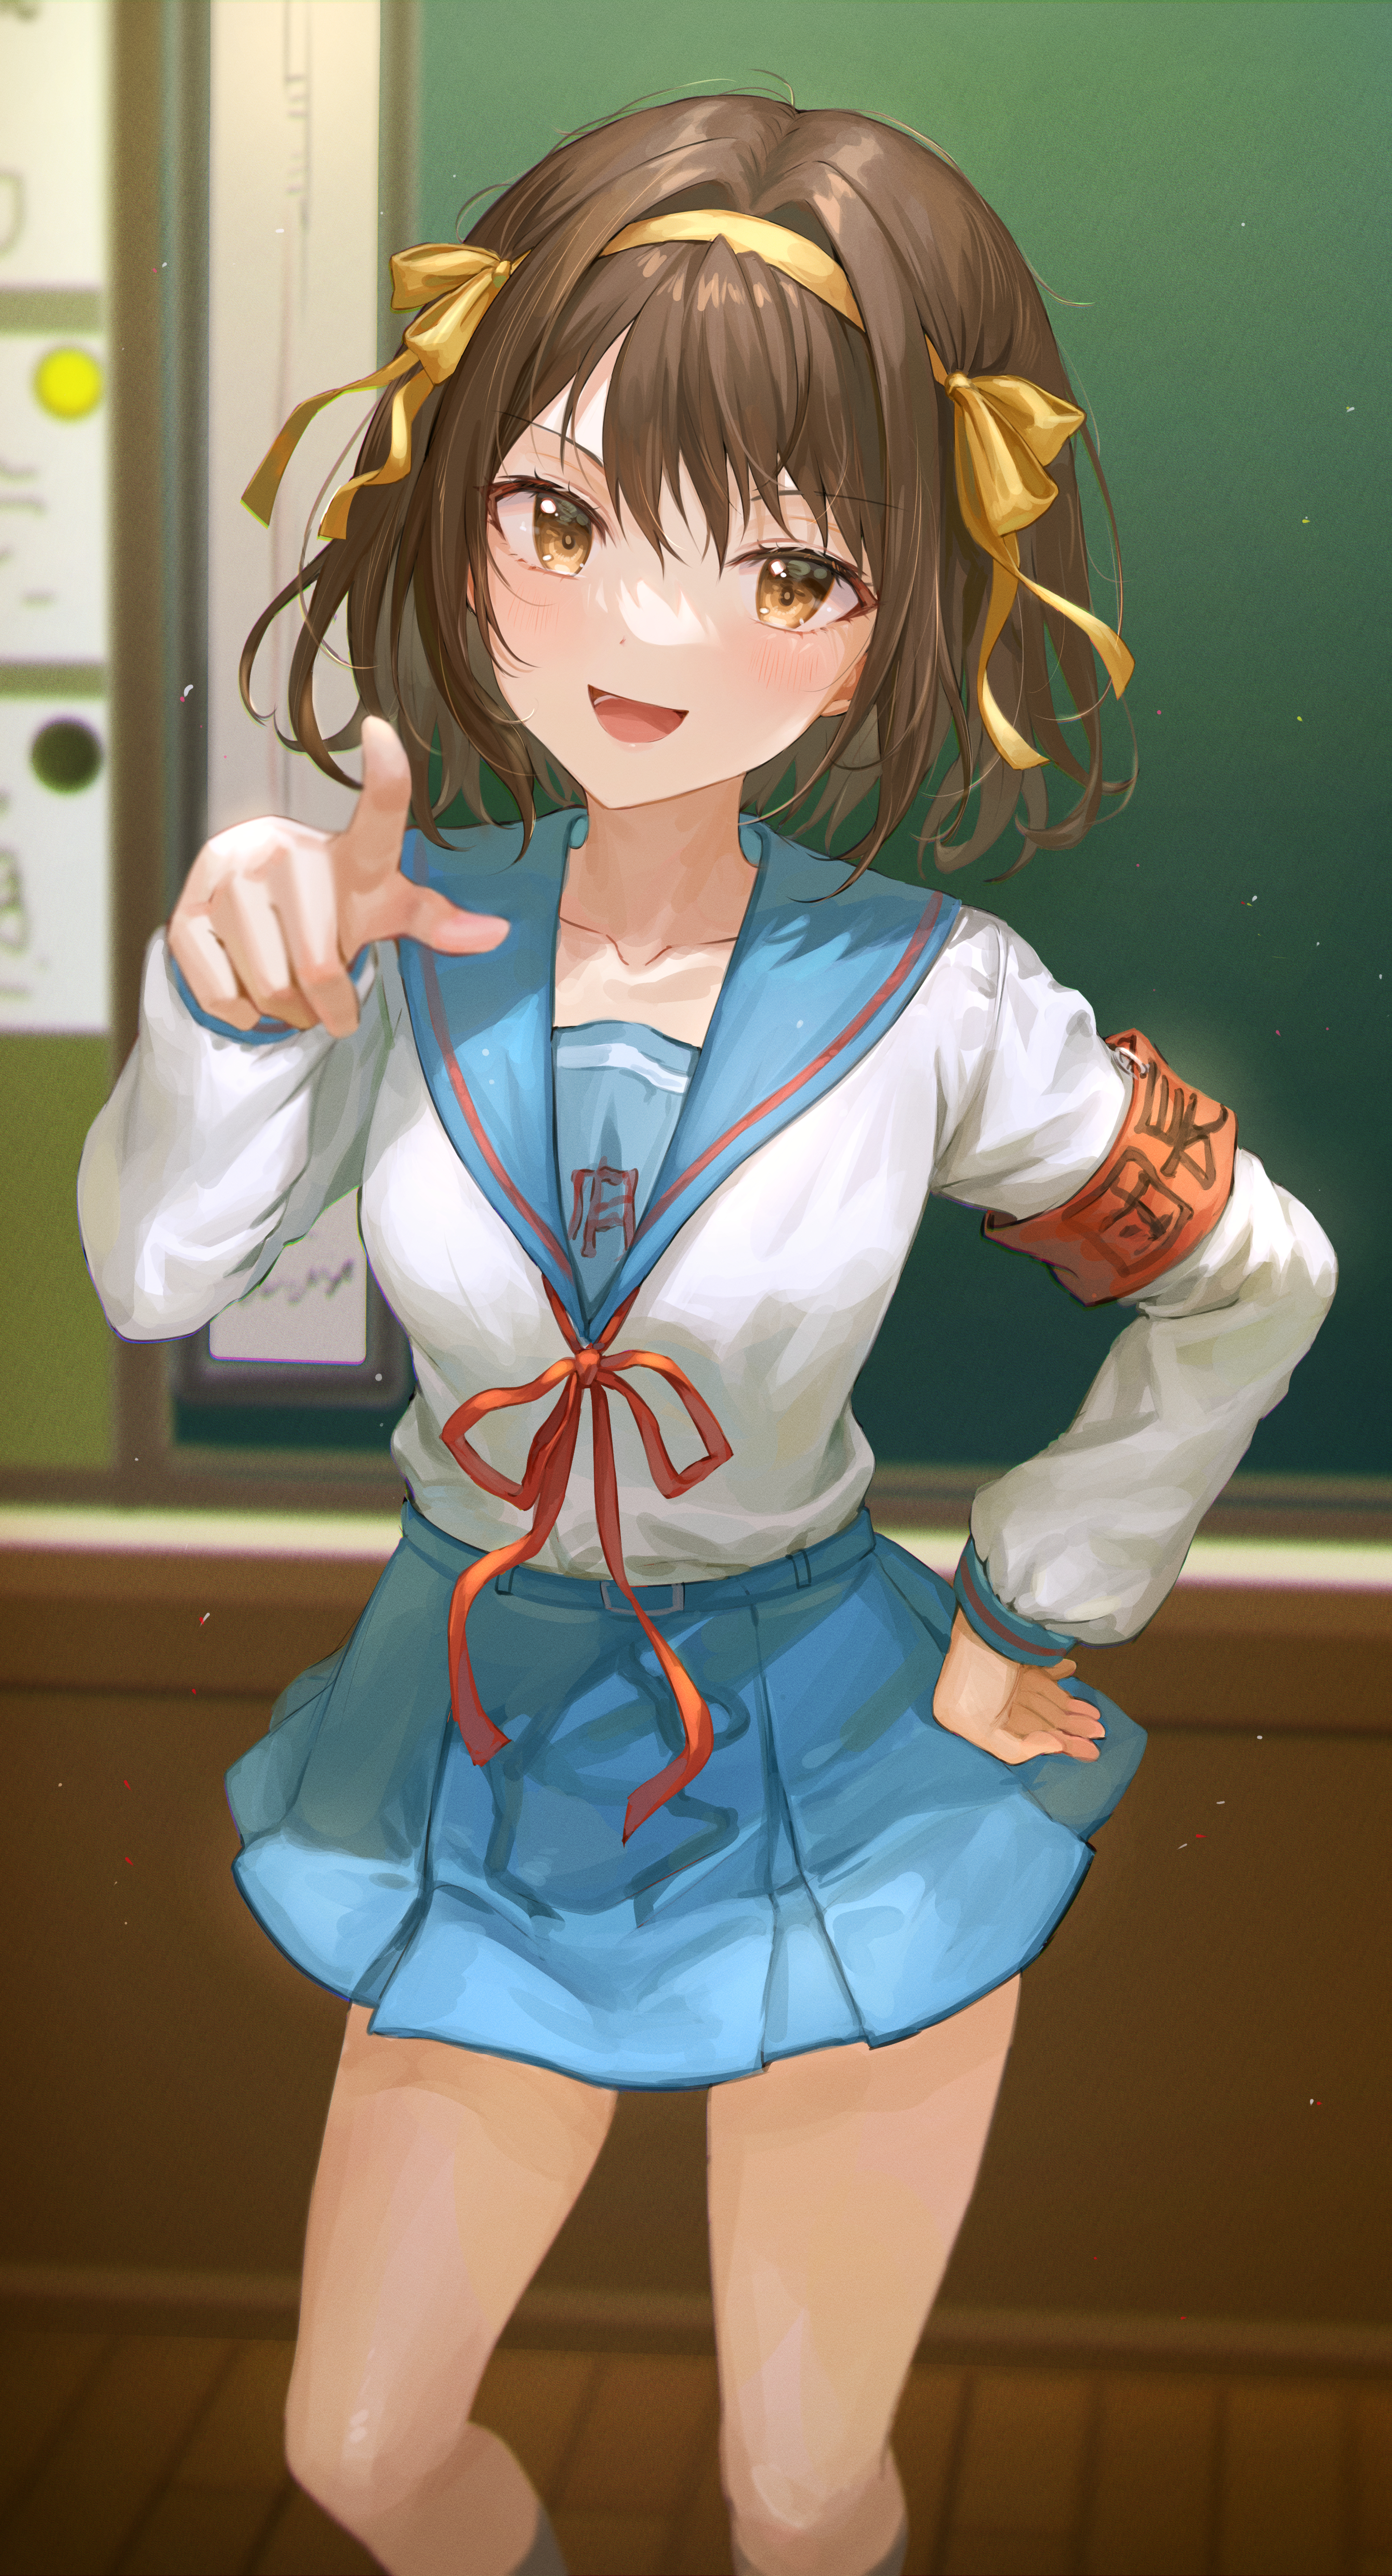 Anime Anime Girls Tokkyu Artista Suzumiya Haruhi Sailor Uniform Classroom Looking At Viewer Finger P 2679x4957